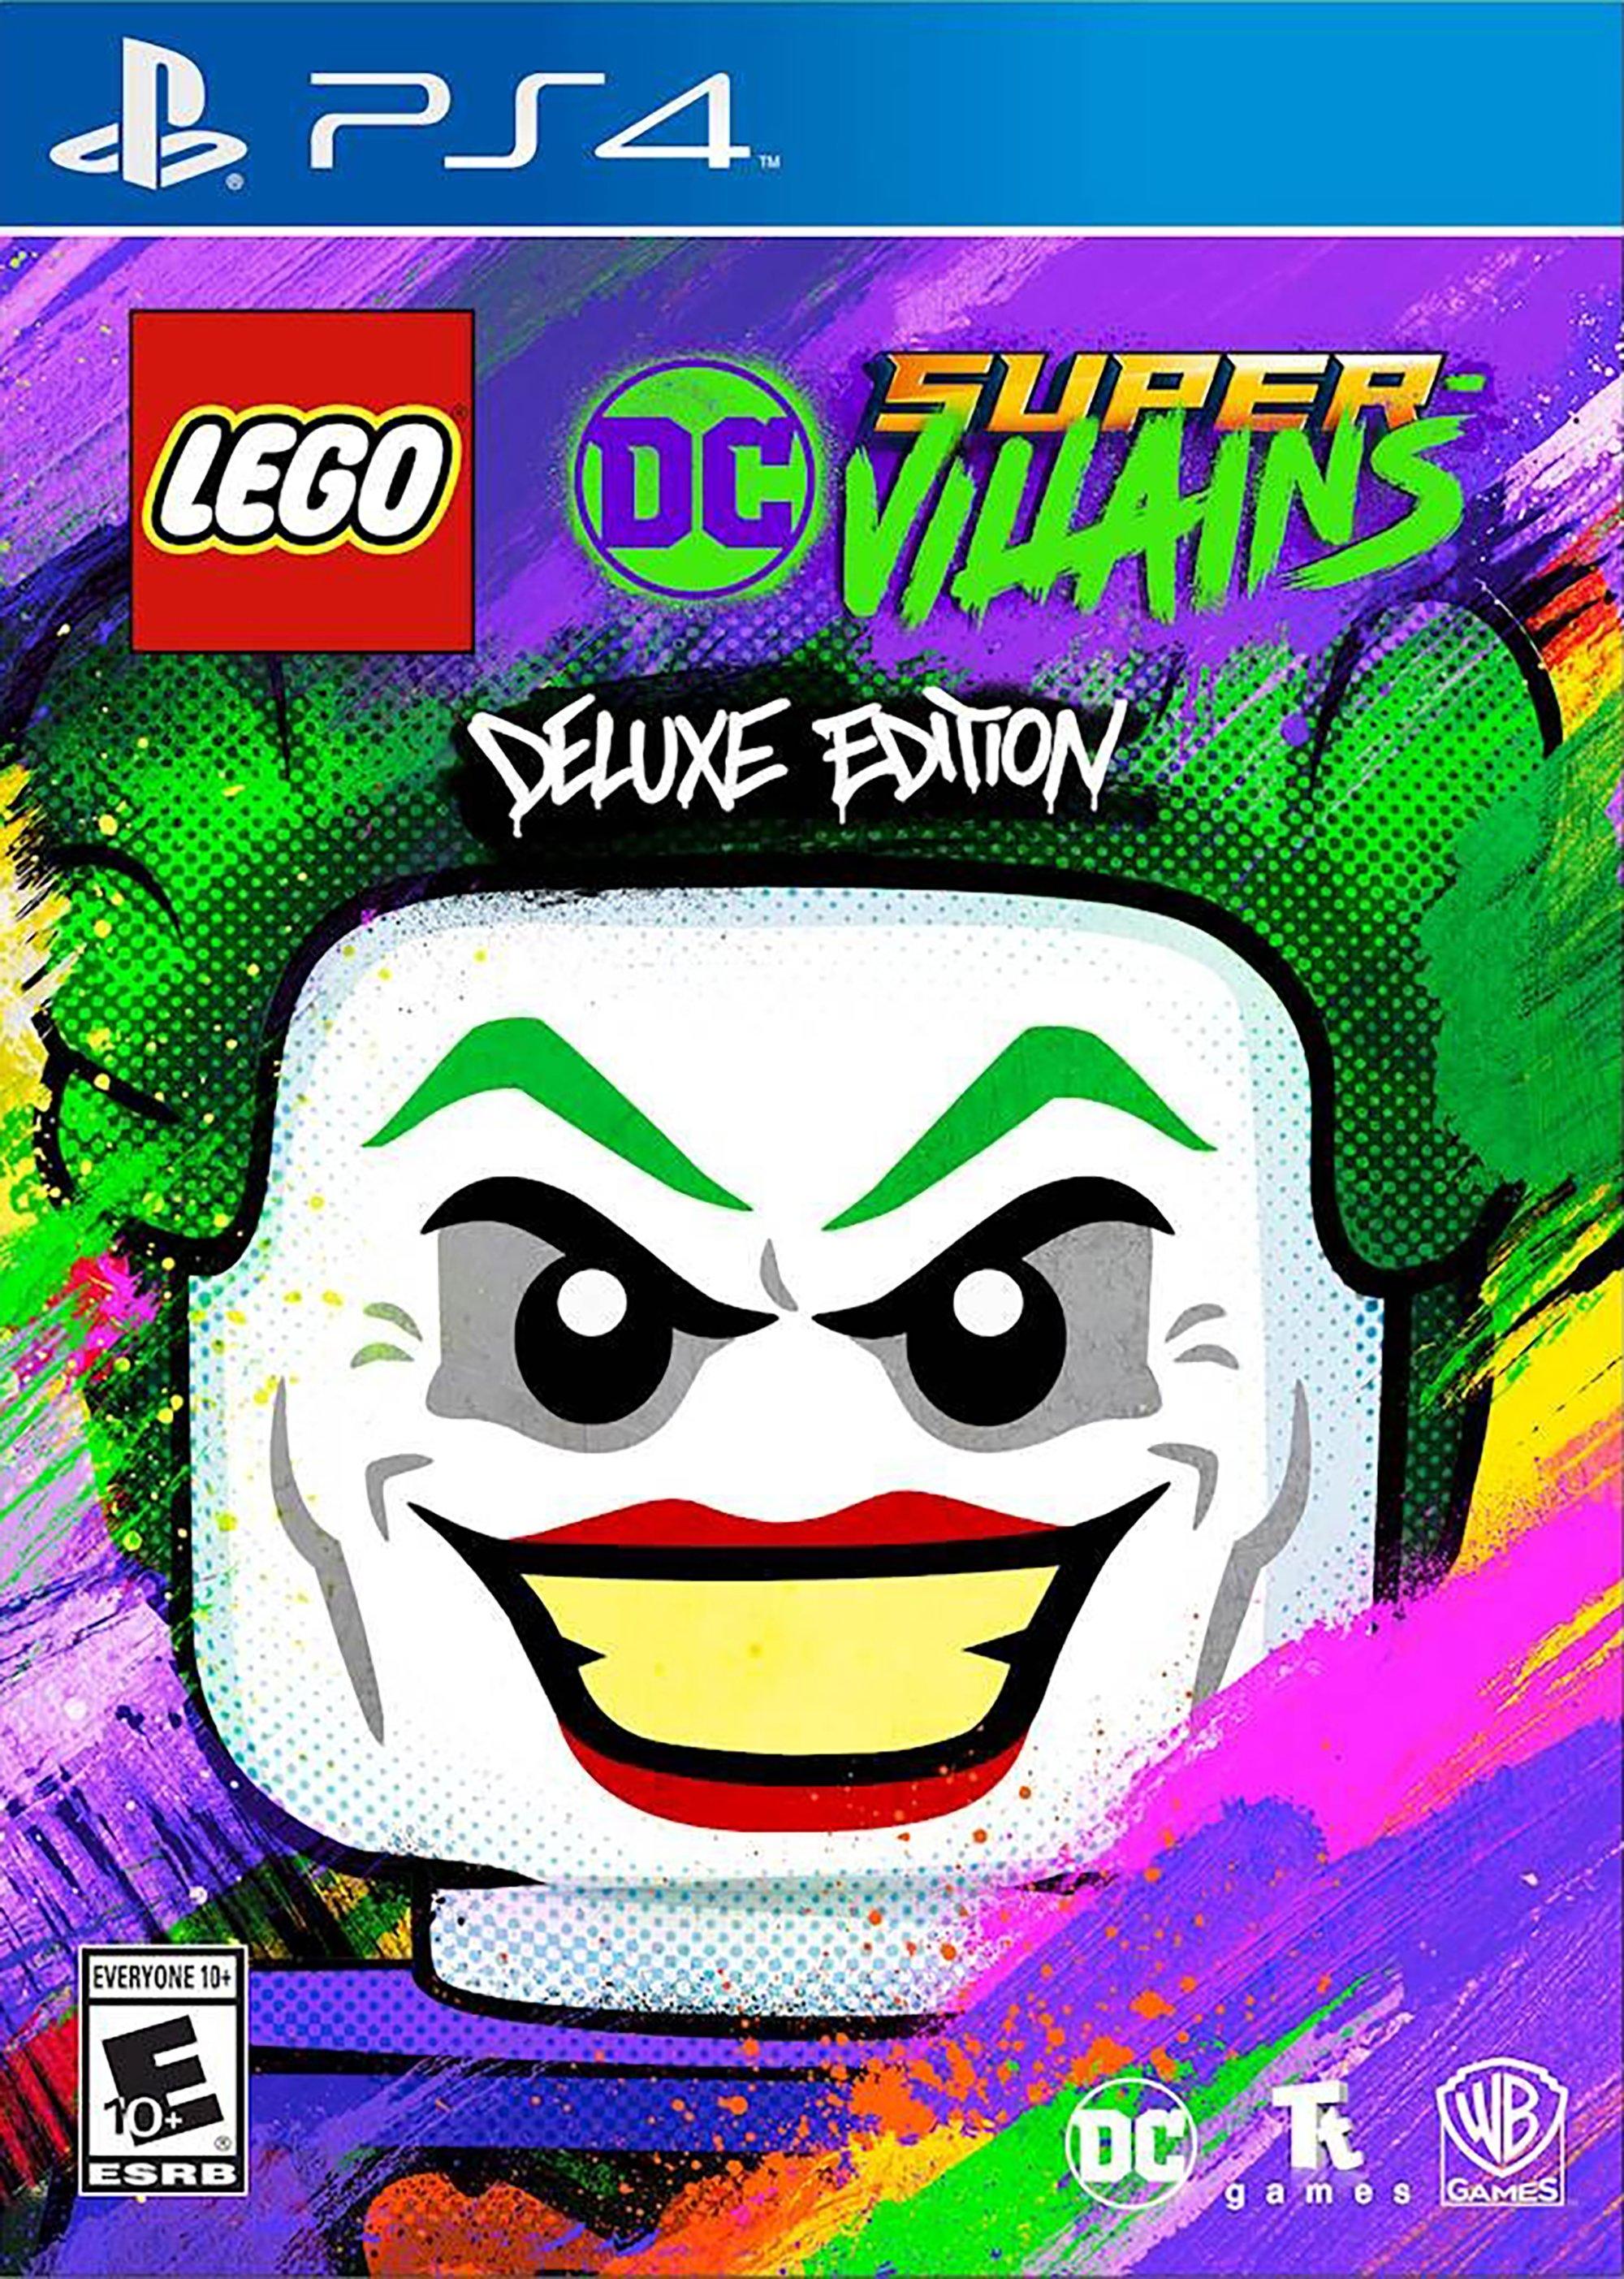 ps4 lego dc super villains deluxe edition